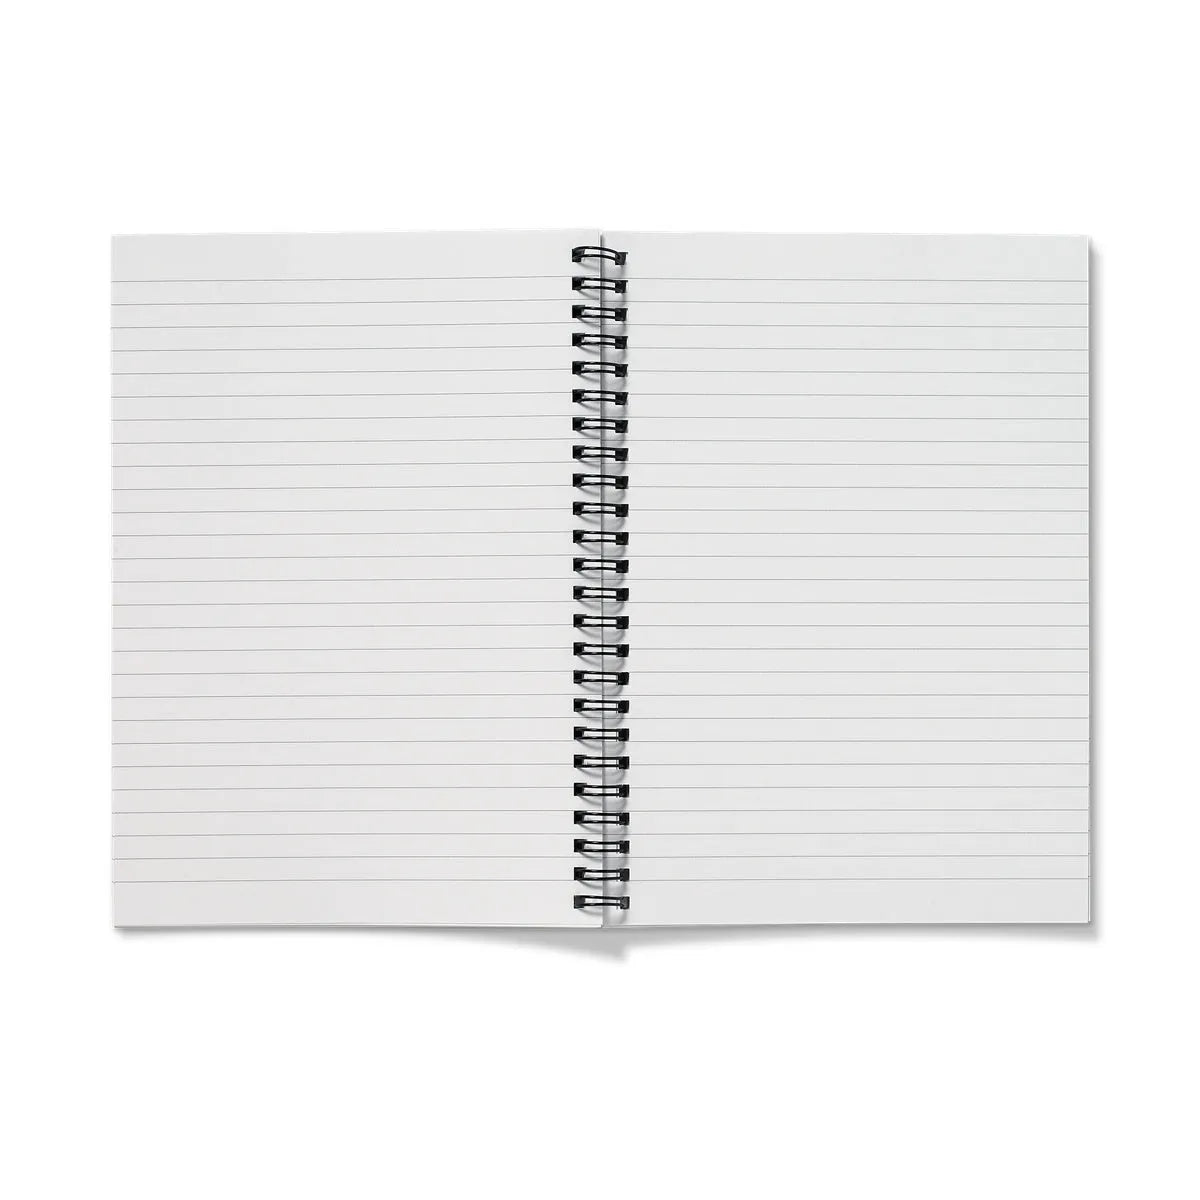 Every Deity Notebook - Notebooks & Notepads - Aesthetic Art